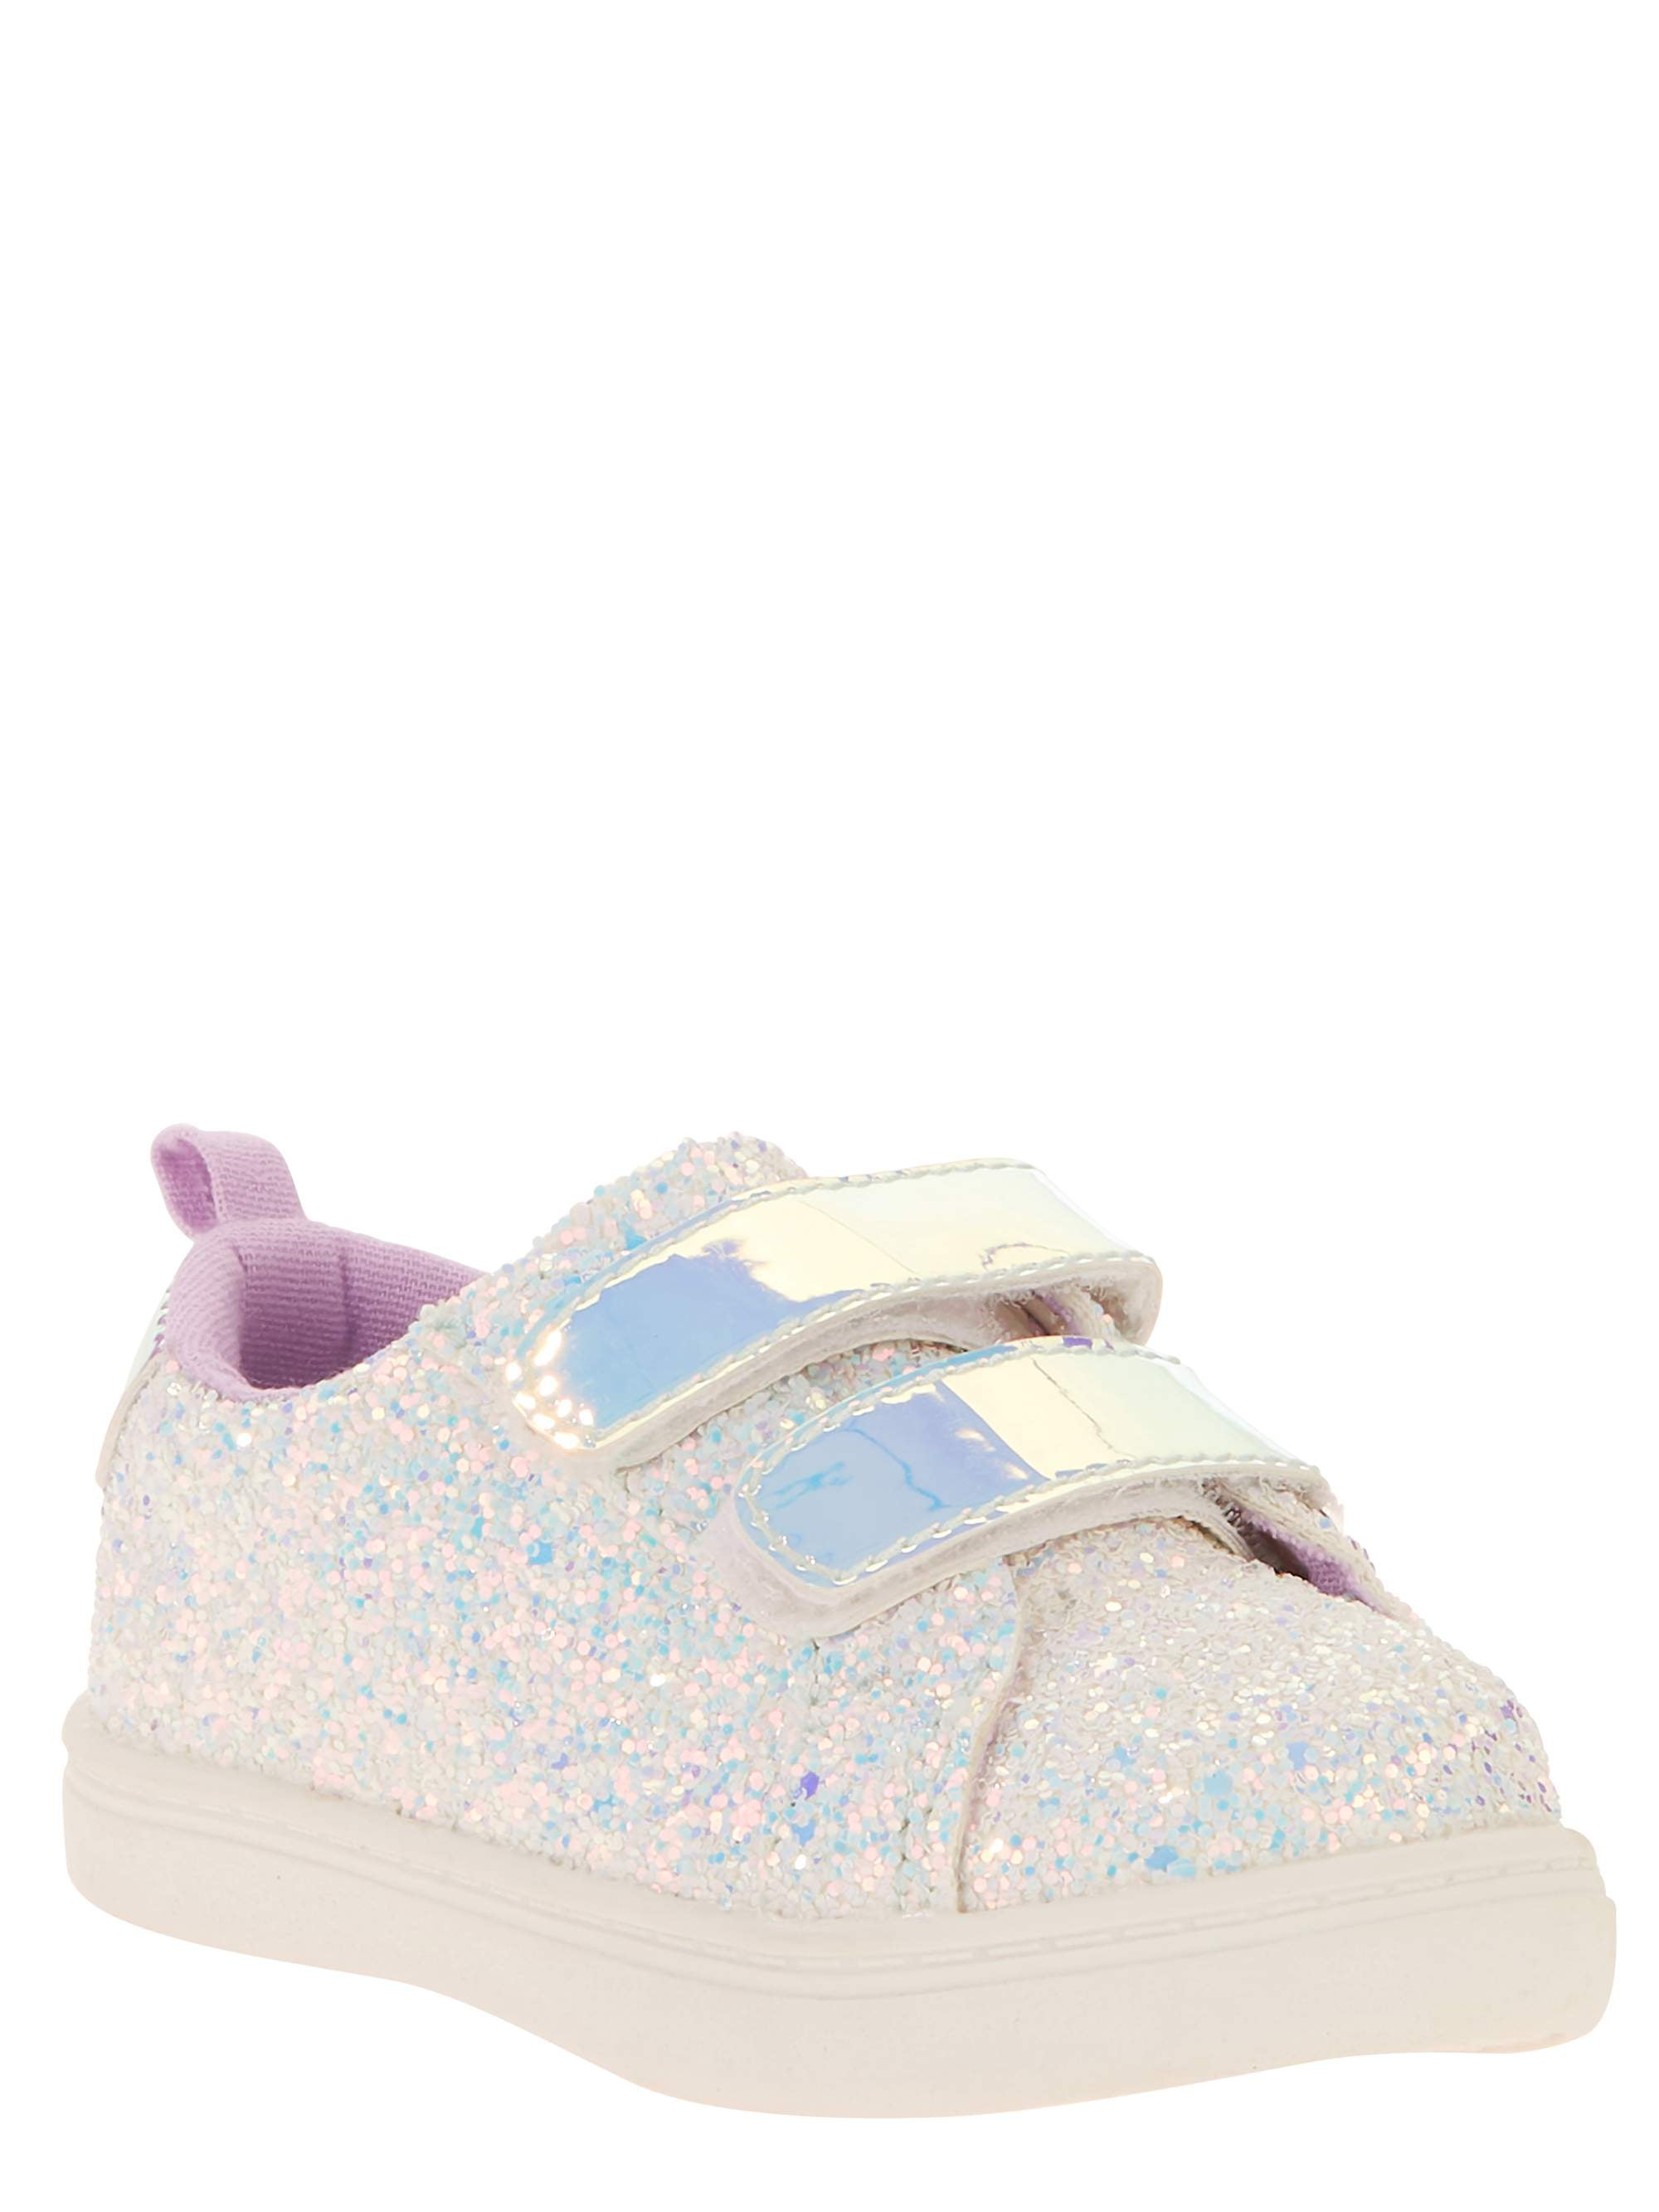 Wonder Nation Infant Girls Pre Walk Casual Glitter Sparkle Shoes White 3,4,5 NEW 